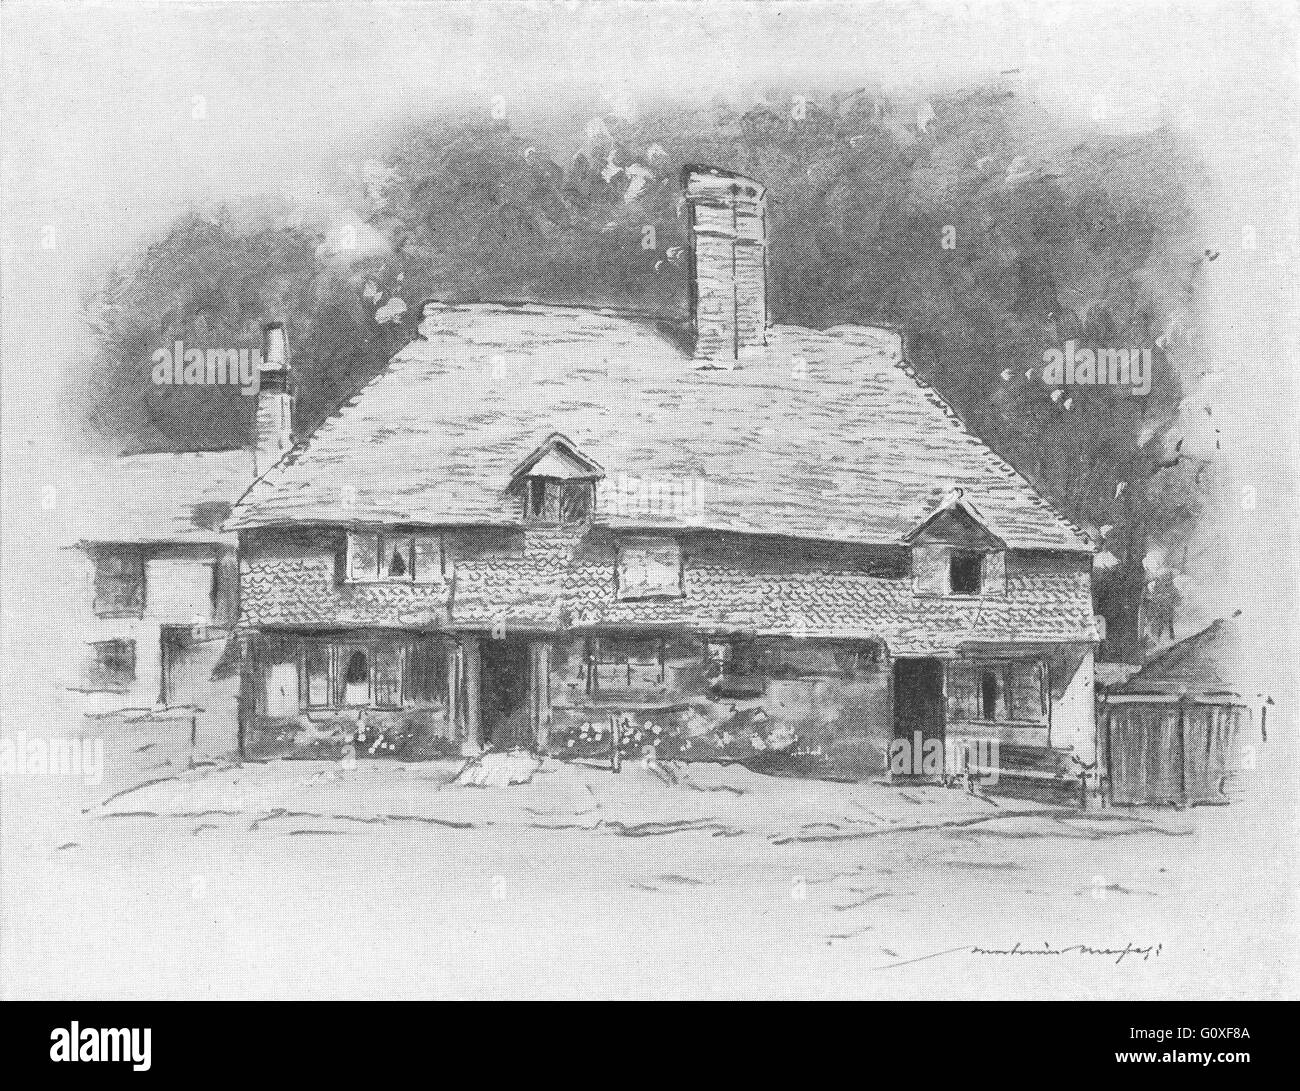 SURREY: England: A cottage in Surrey, vintage print 1920 Stock Photo